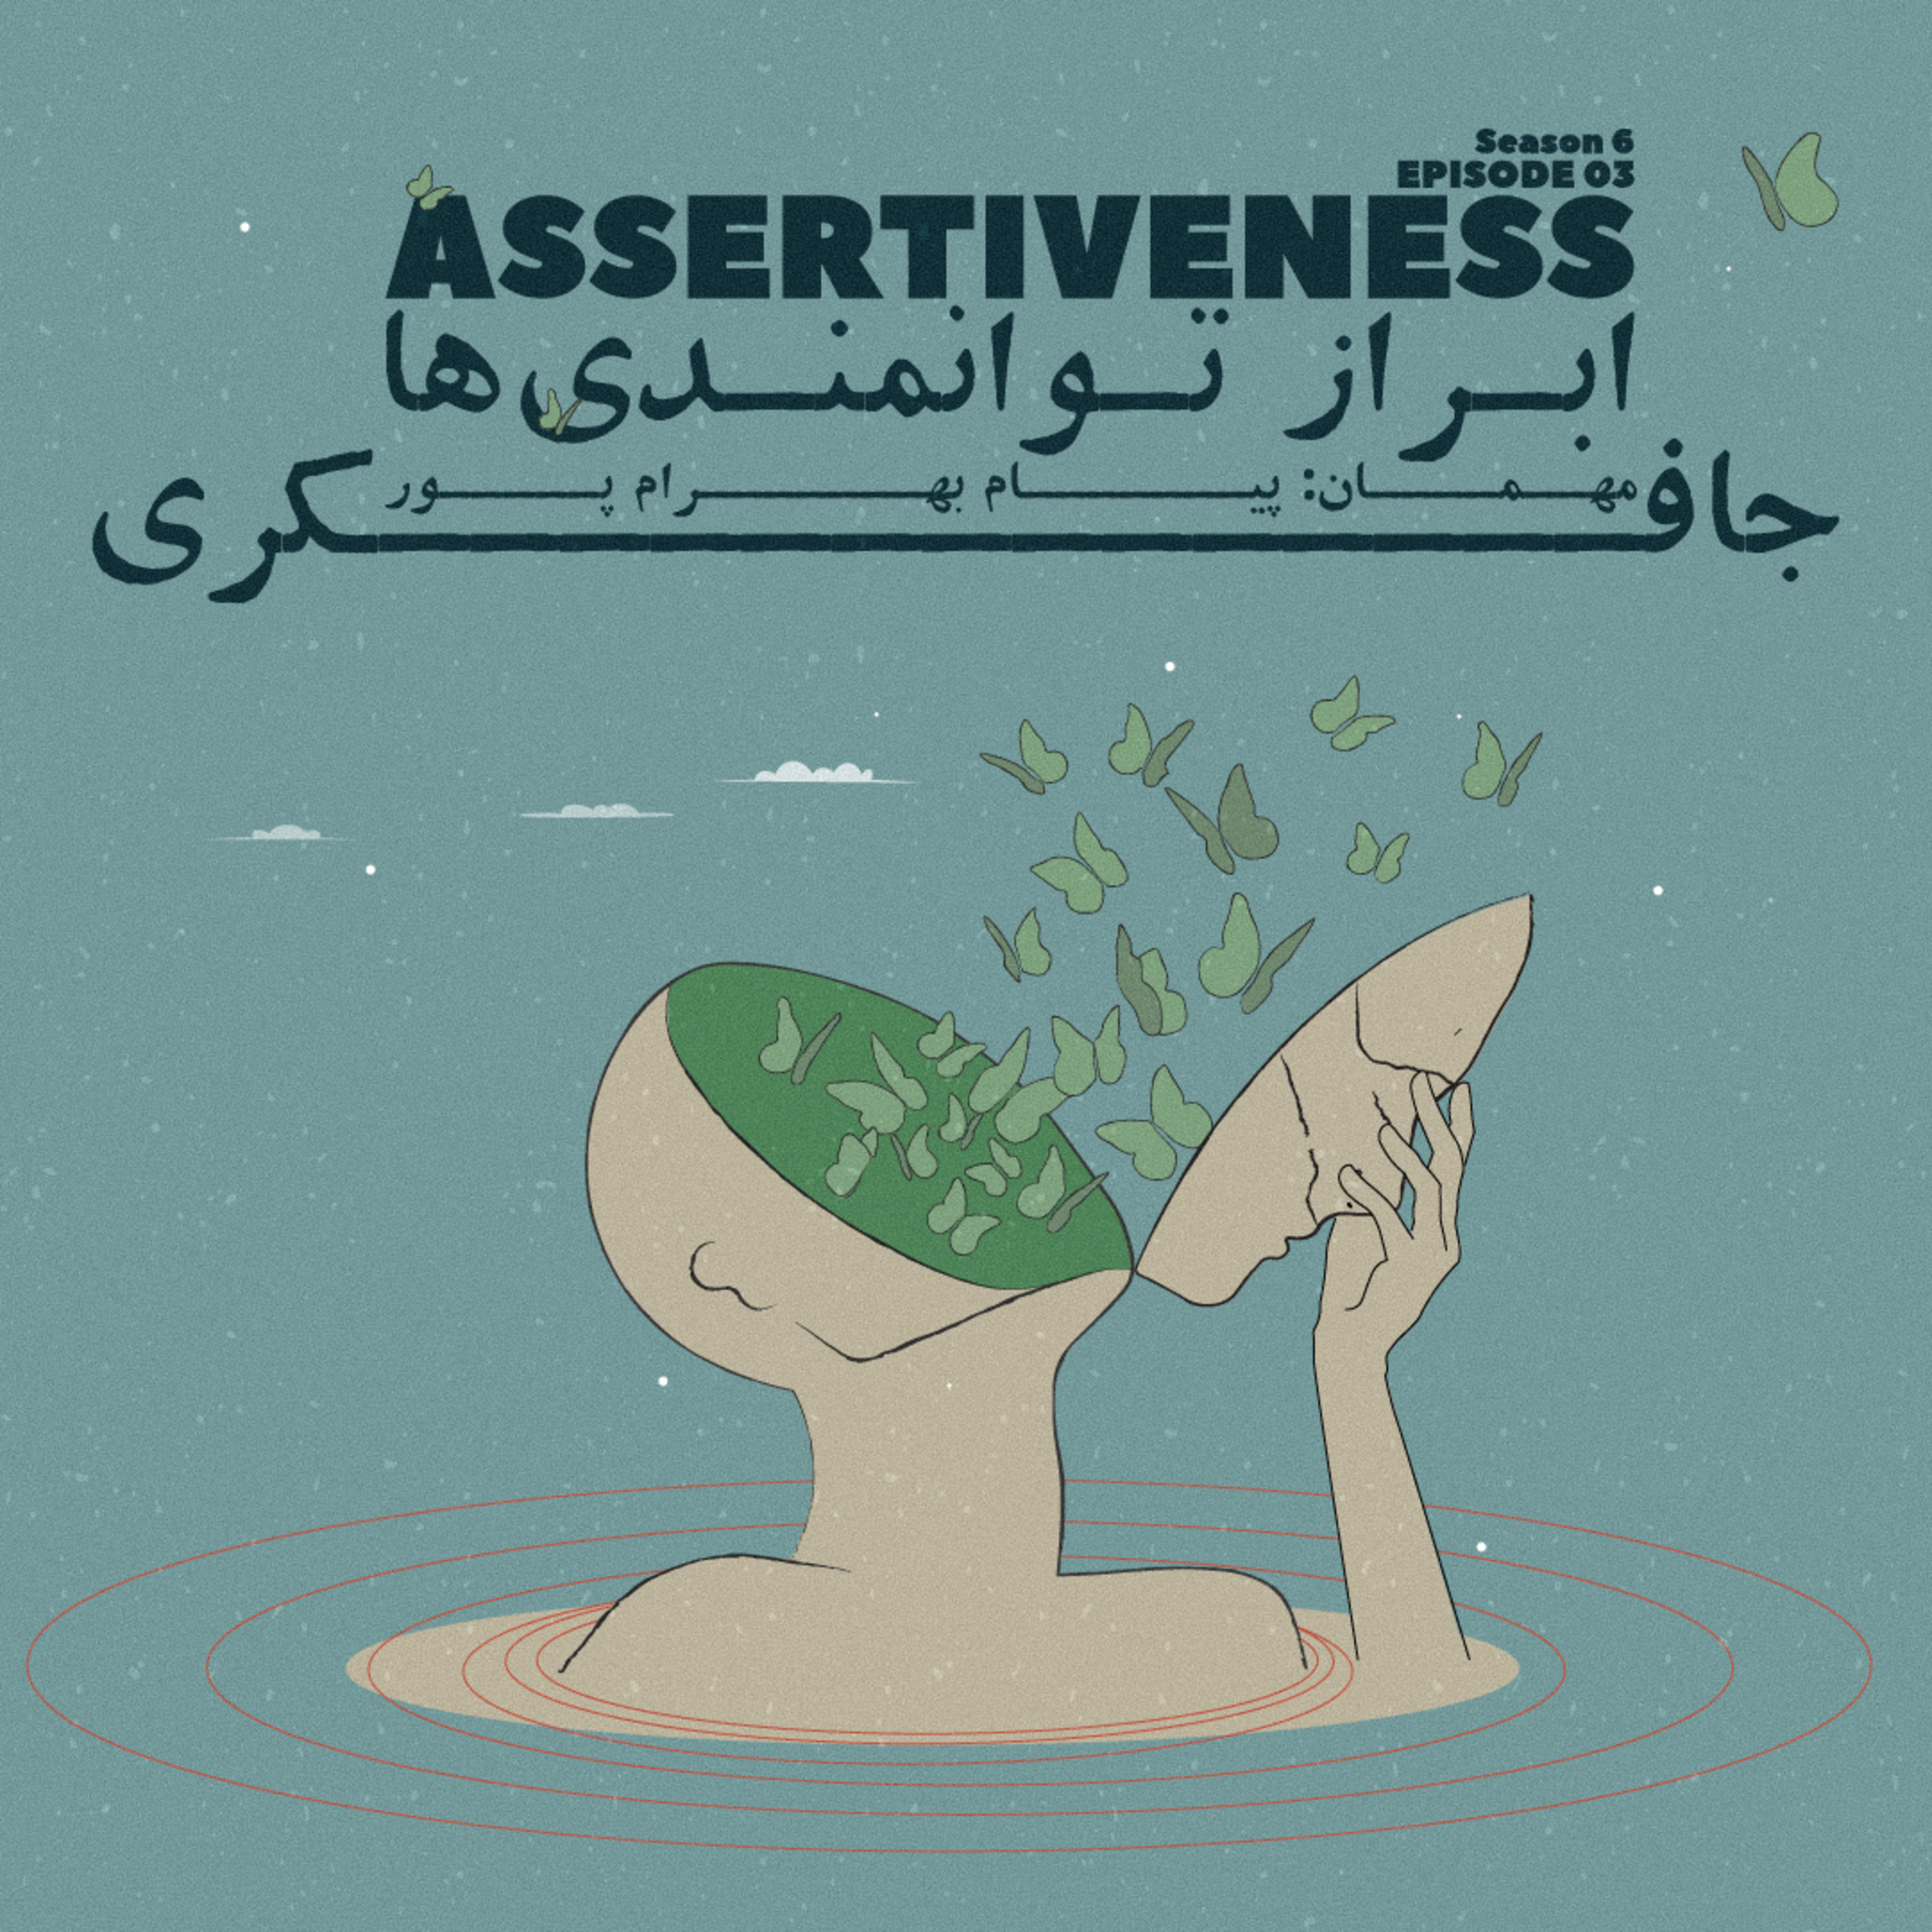 Episode 03 - Assertiveness (ابراز توانمندی ها)